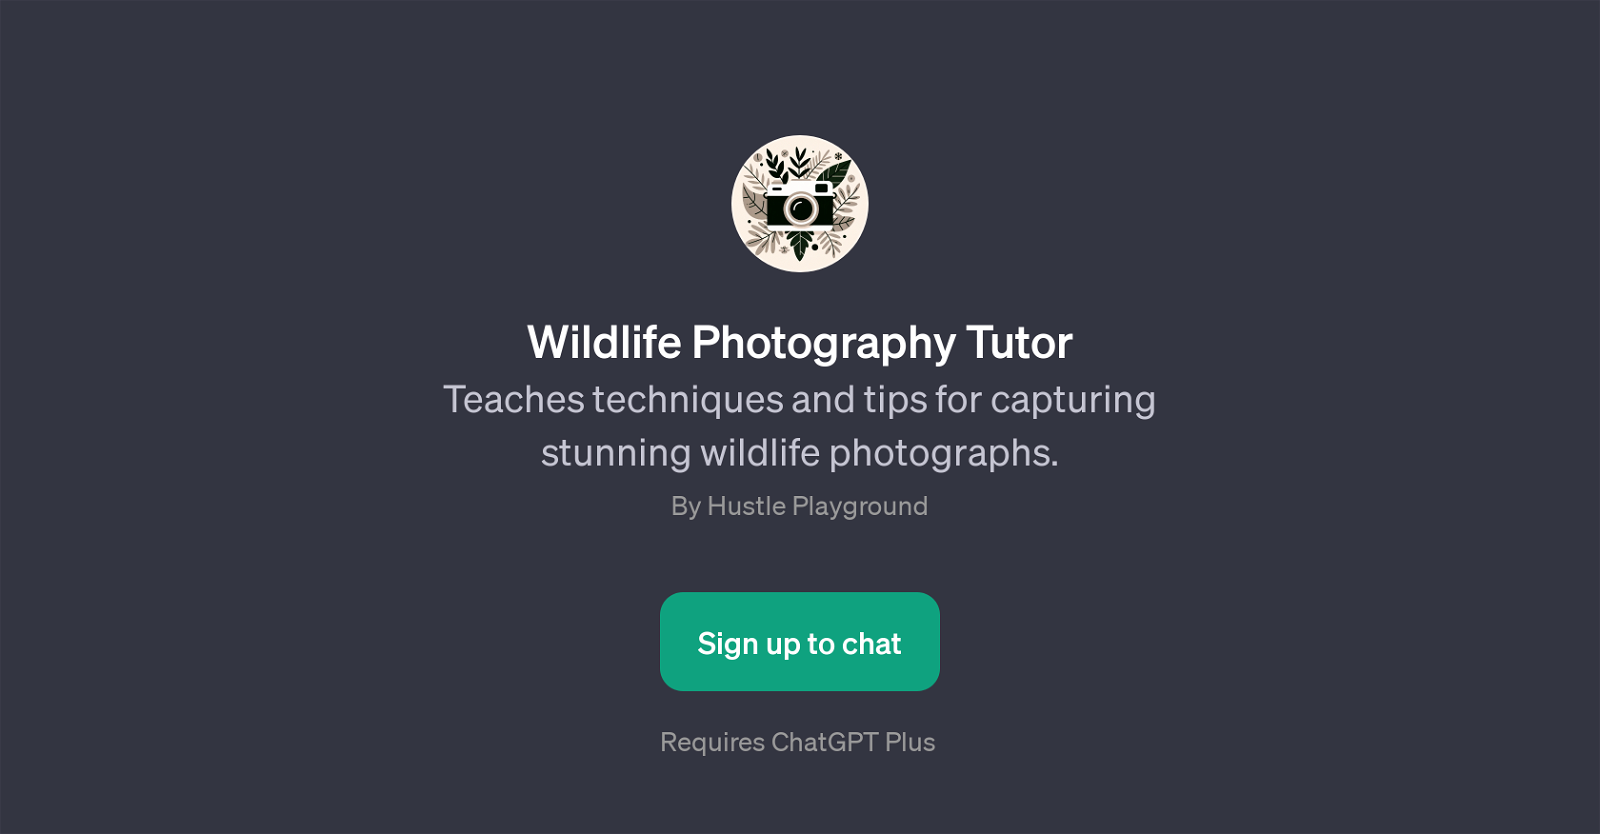 Wildlife Photography Tutor website